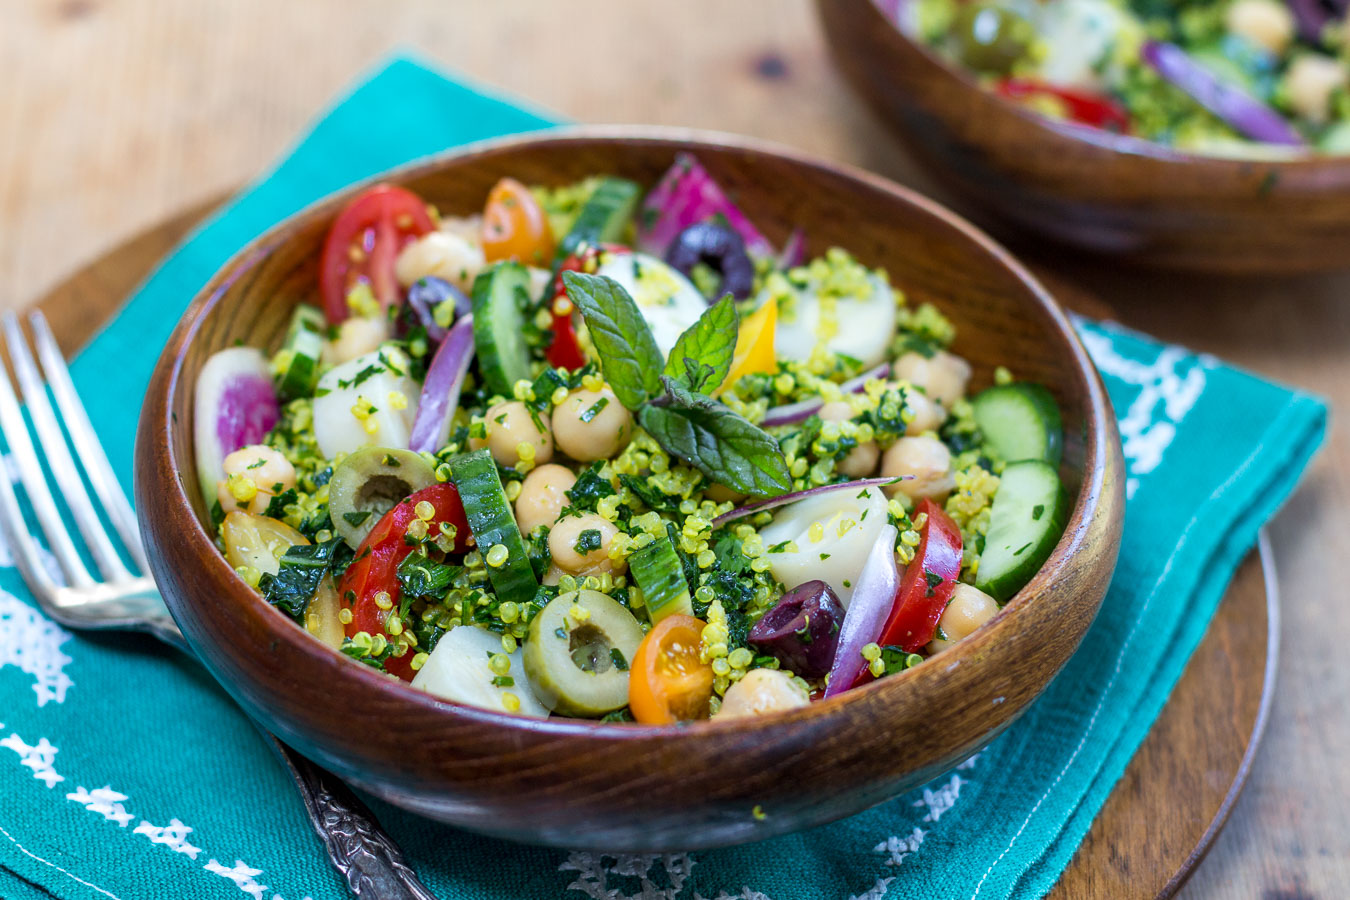 Karen's Quinoa Tabbouleh - Vegetable Salad (Naturally Gluten-Free)